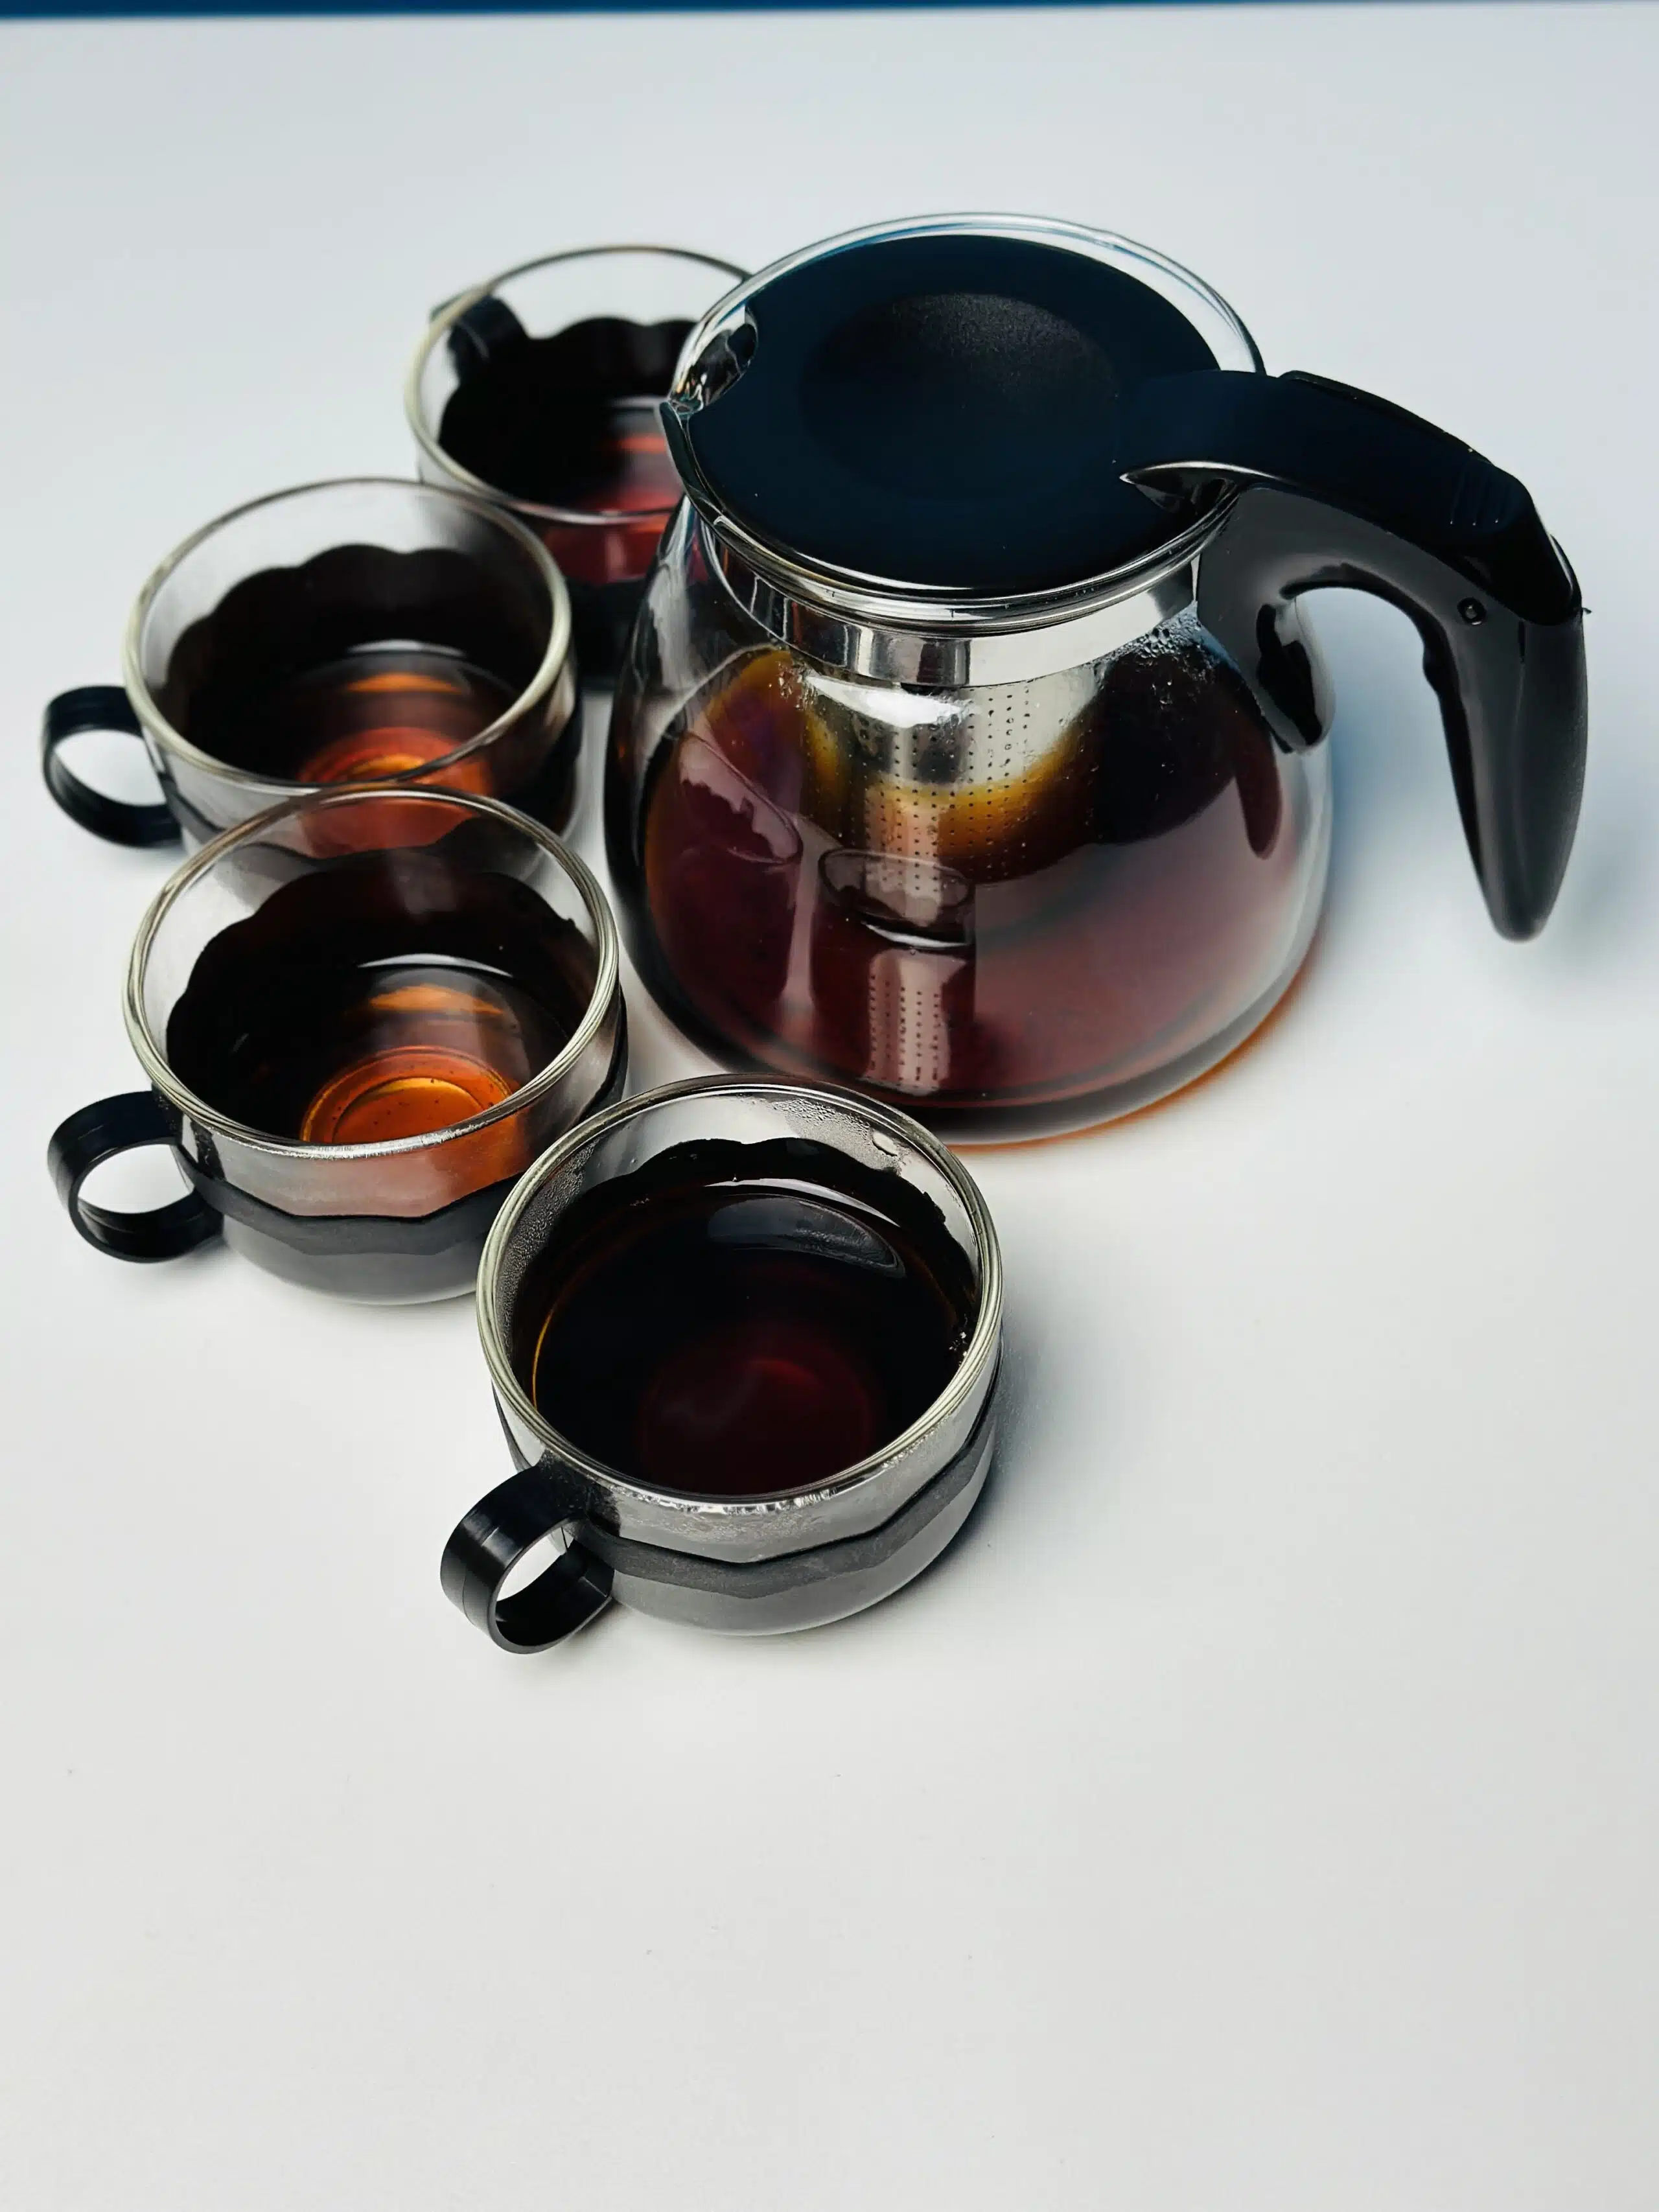 900ml Glass Teapot